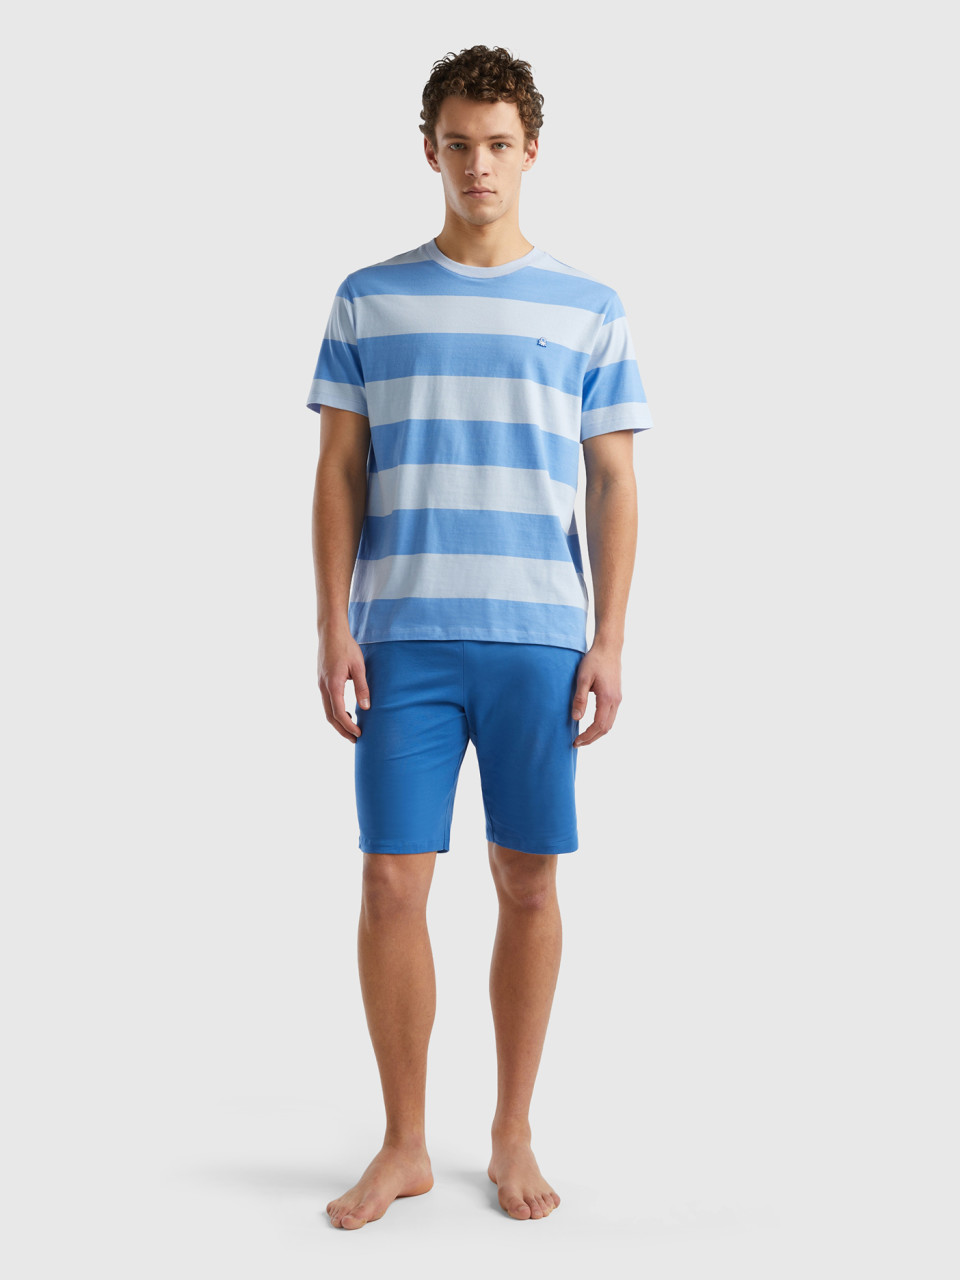 Benetton, Pyjama Avec T-shirt Rayé, Bleu Clair, Homme